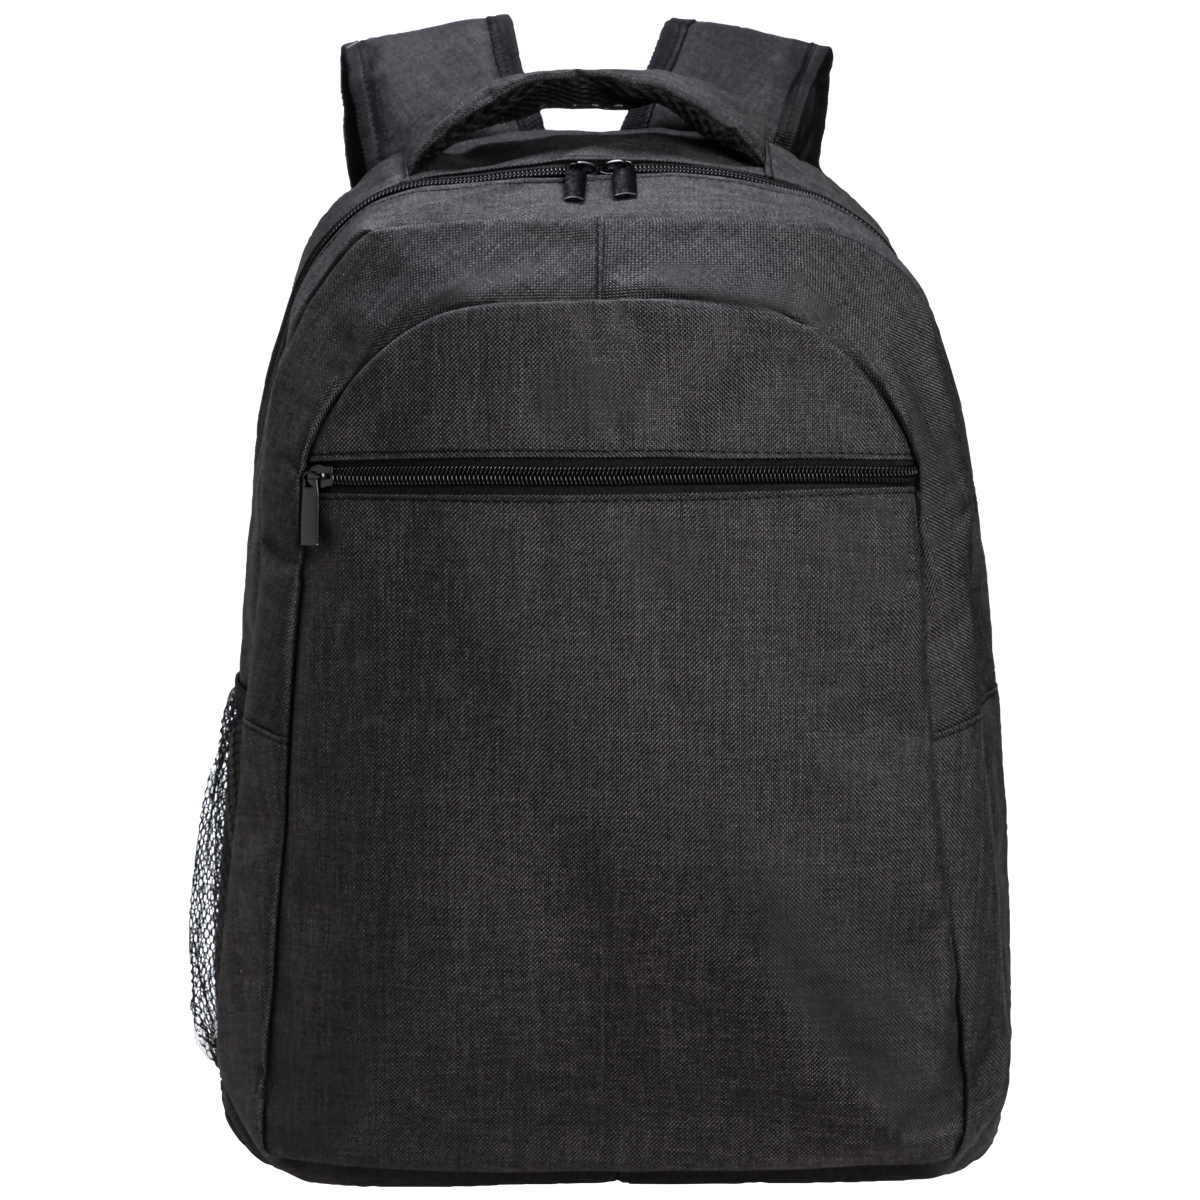 Corvelli Laptop Backpack Product Image